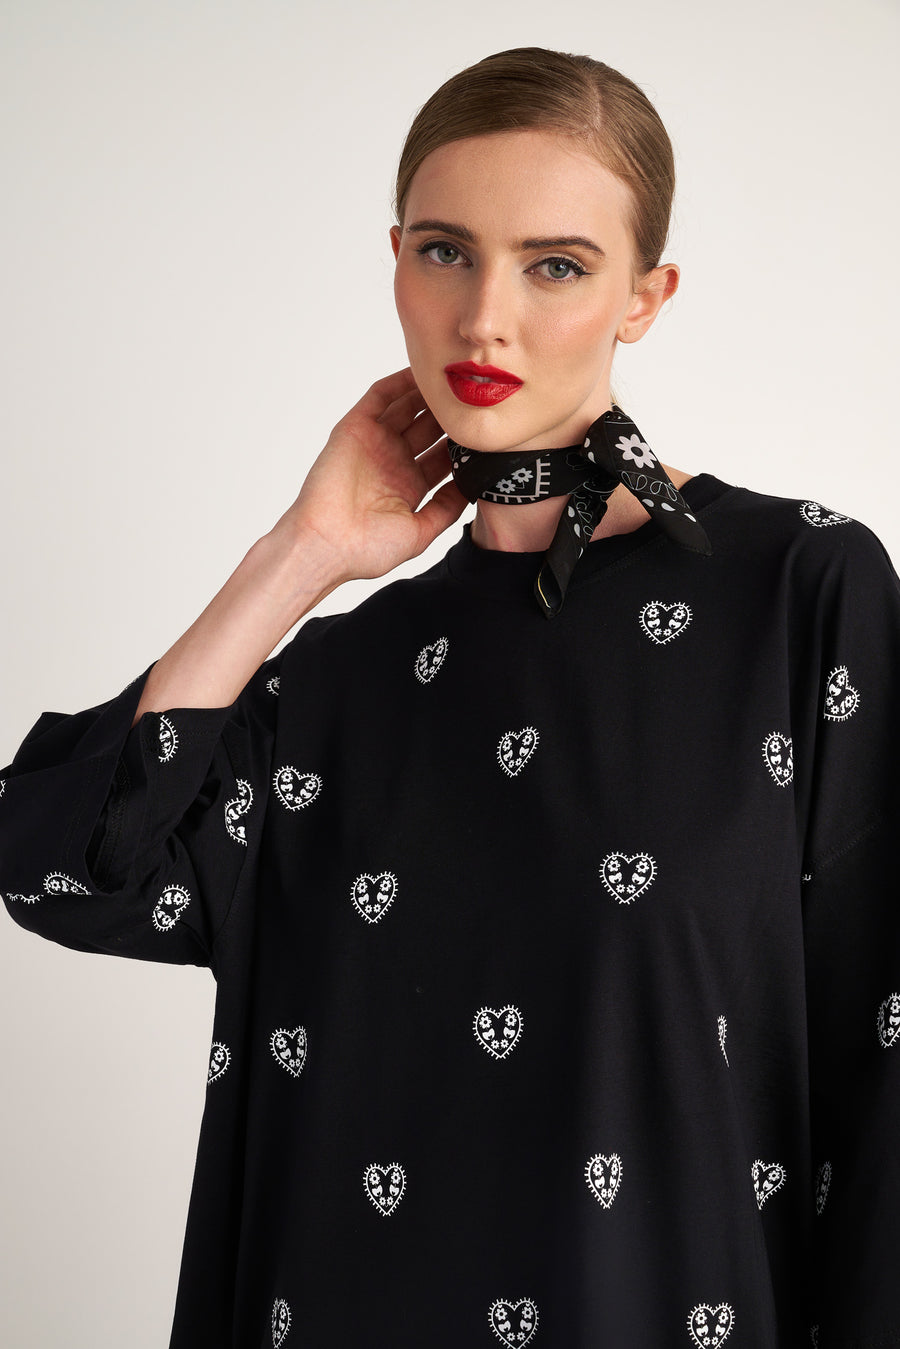 Whitney T-Shirt (Hearts pattern black)